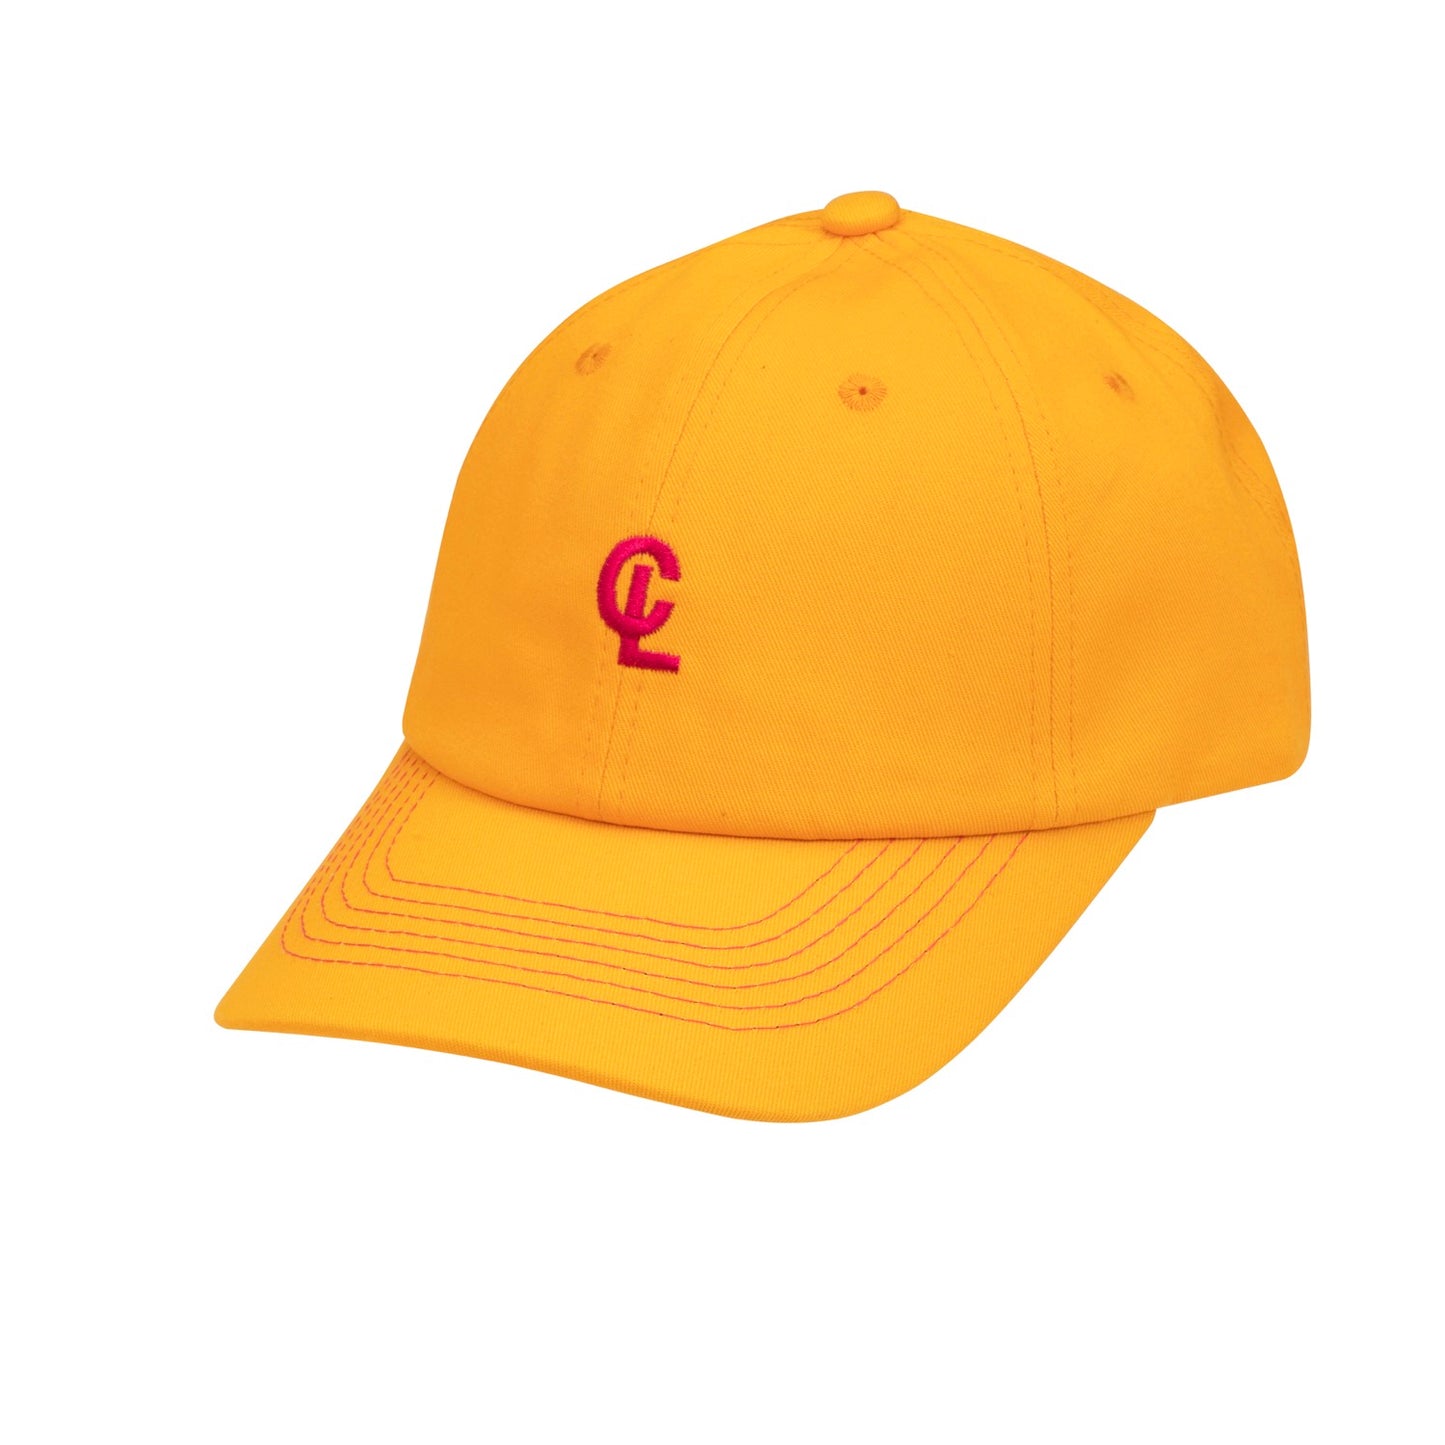 CL CAP HAT